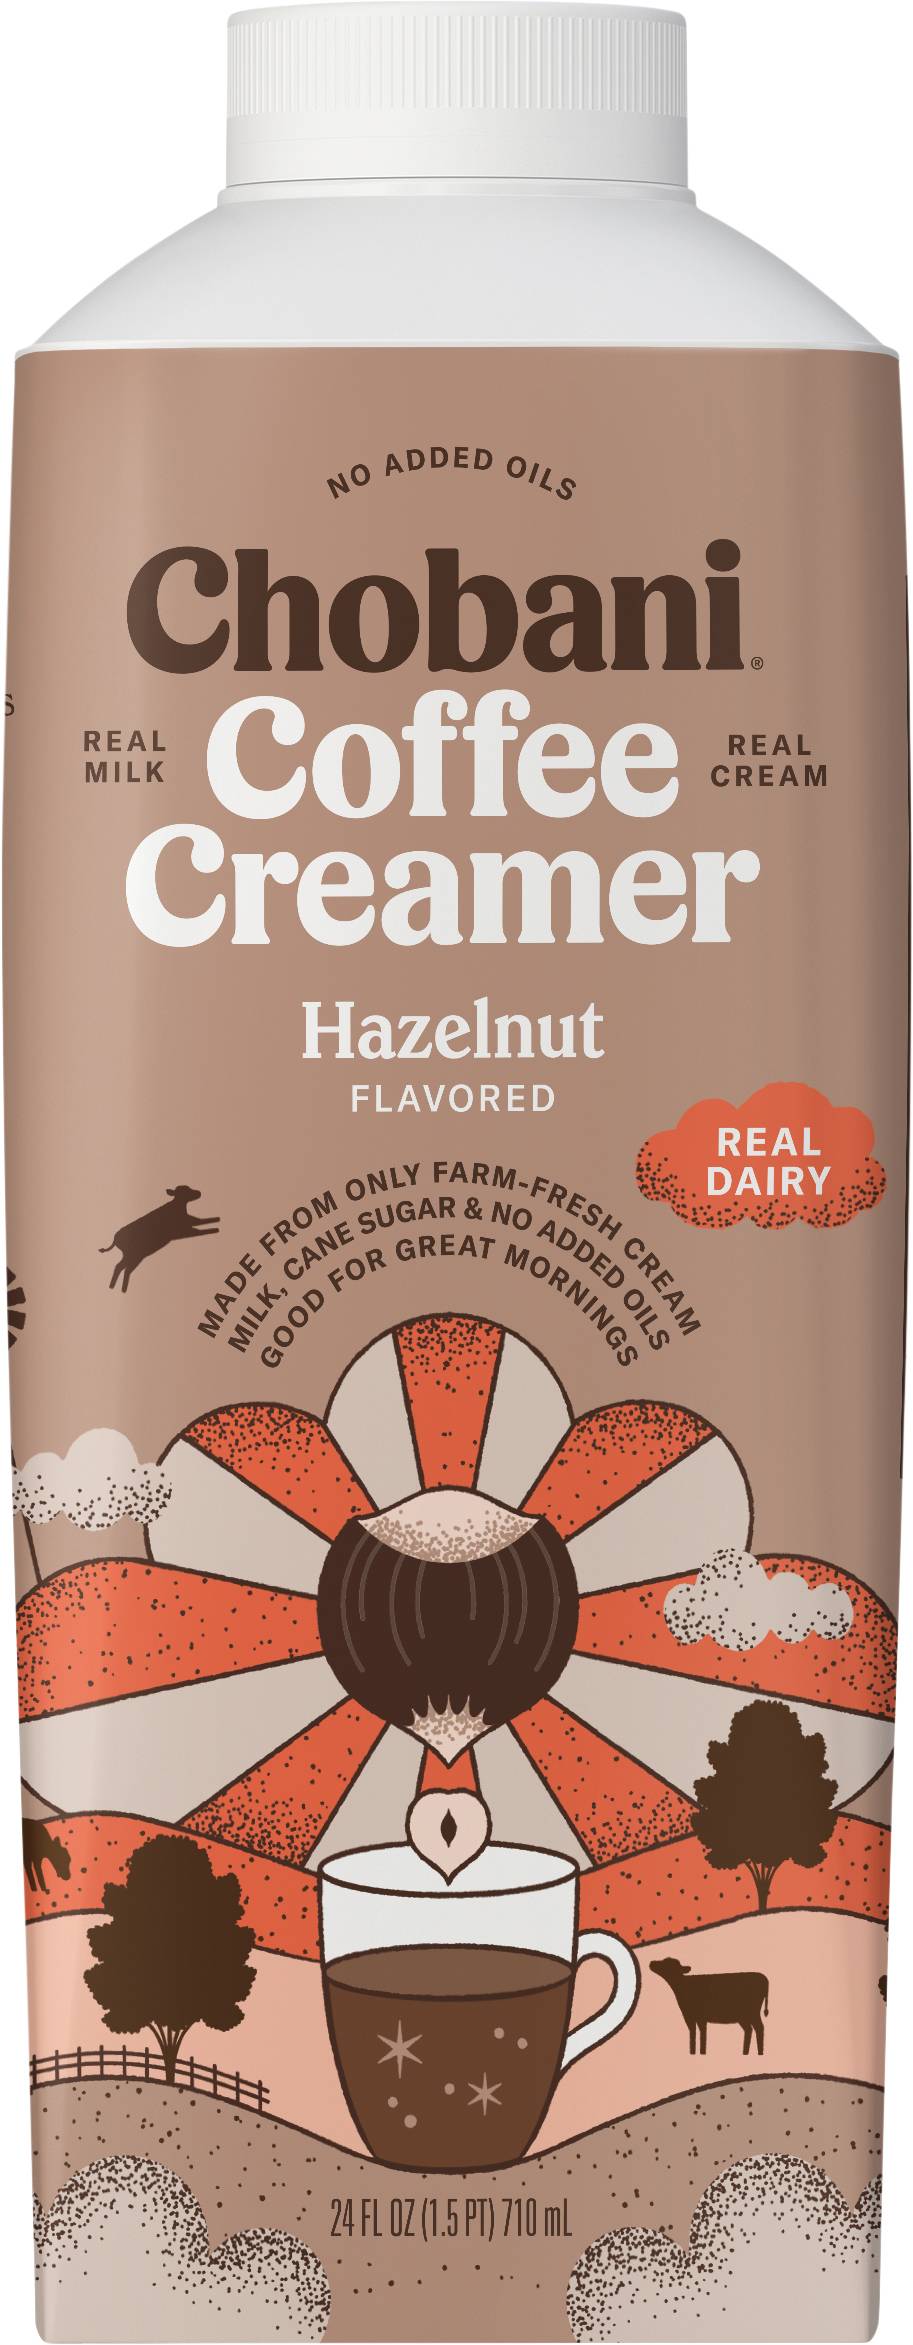 Chobani Hazelnut Flavored Coffee Creamer